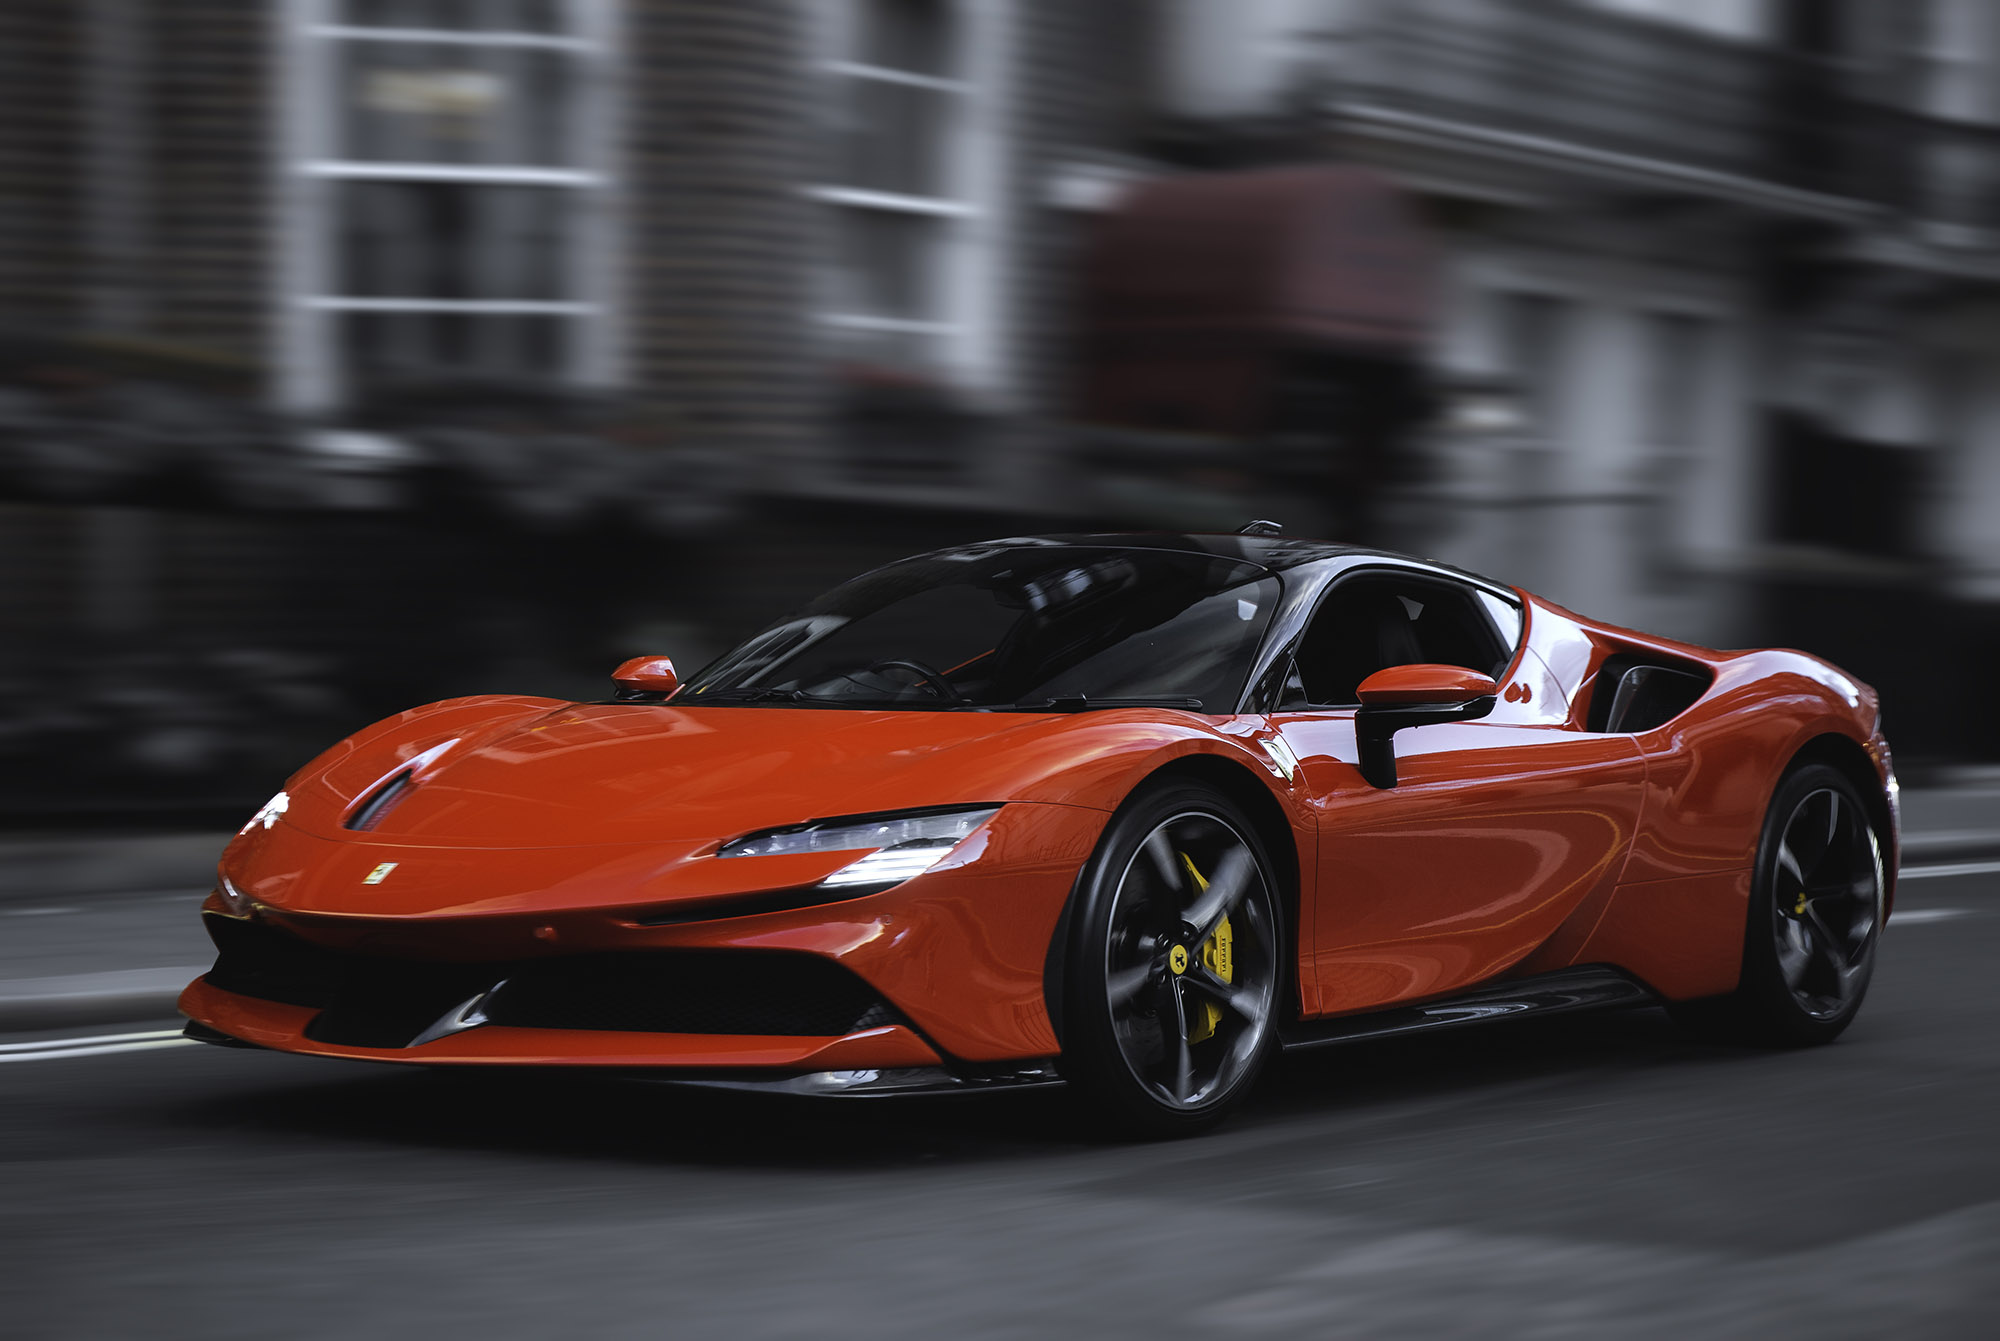 Ferrari luxury margins electric cars Maranello racing Italy - Bloomberg